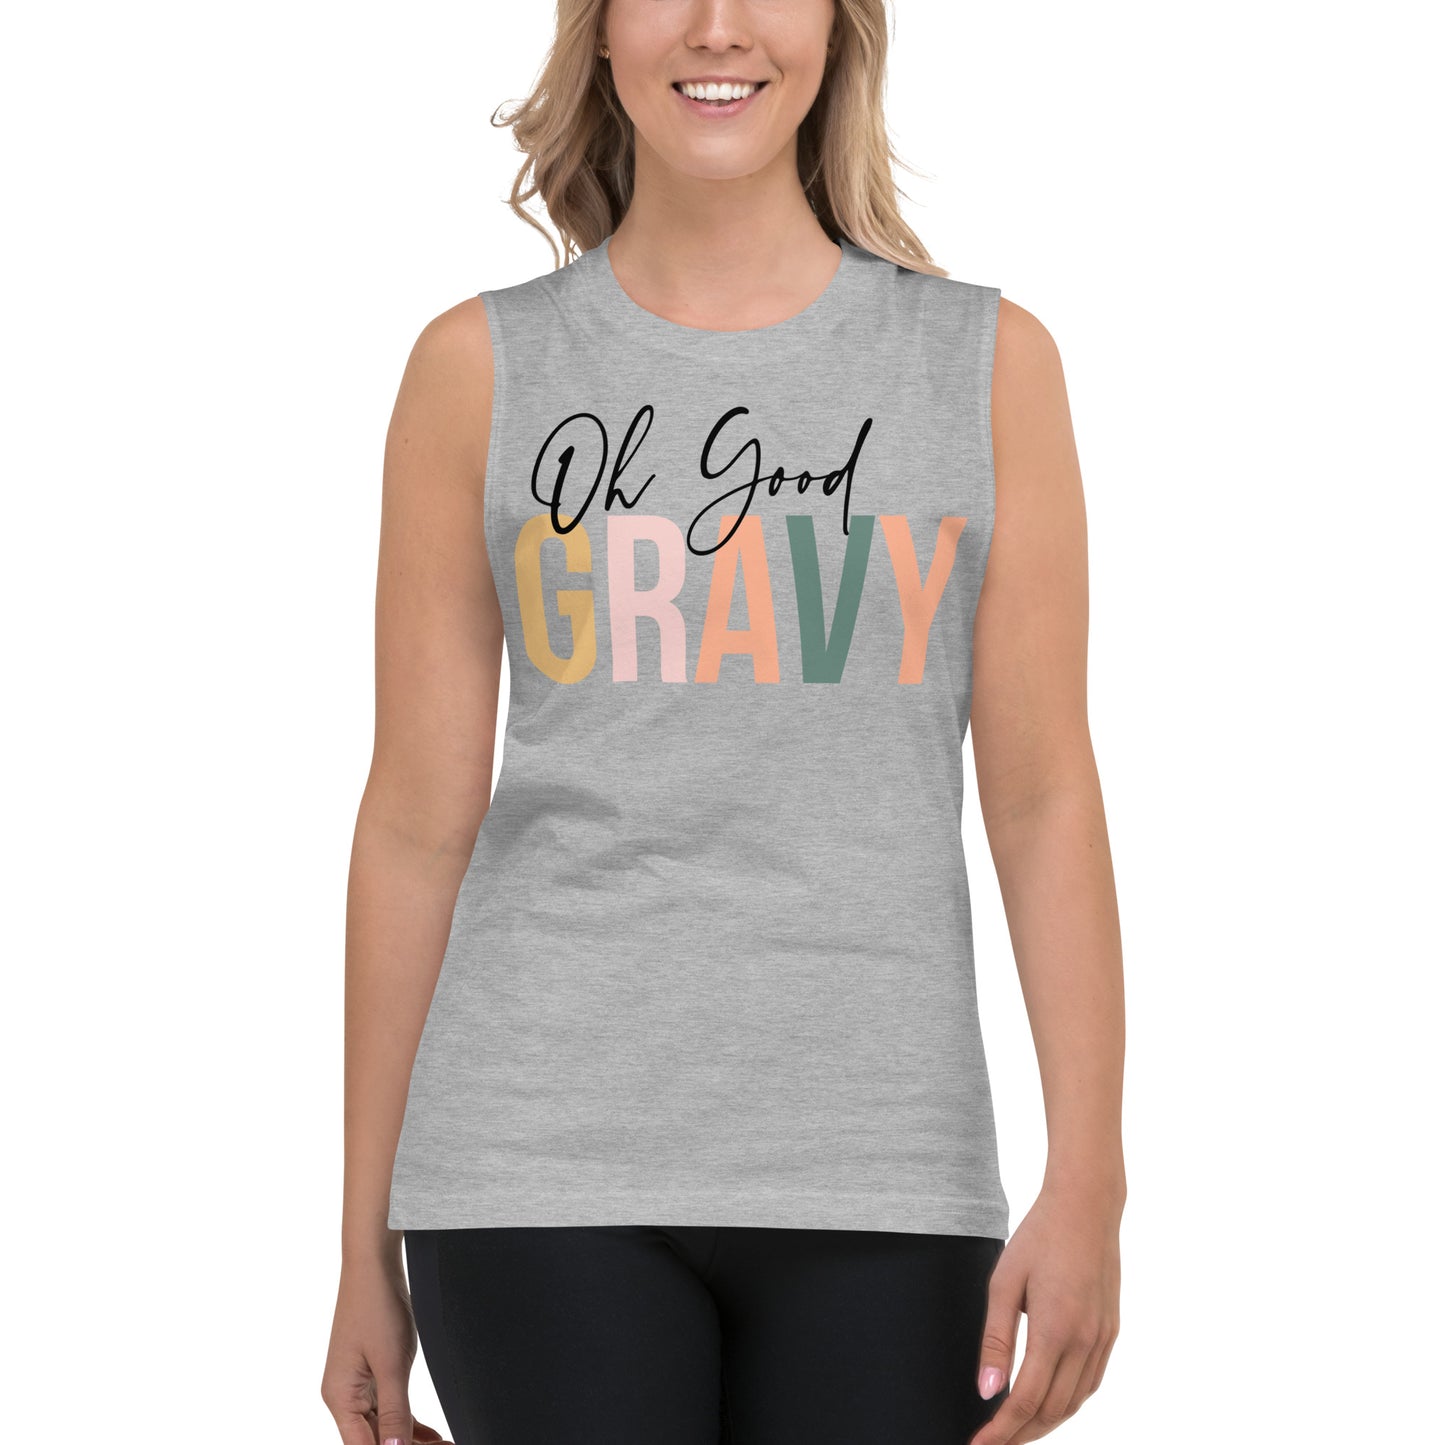 Oh Good Gravy / Unisex Muscle Shirt